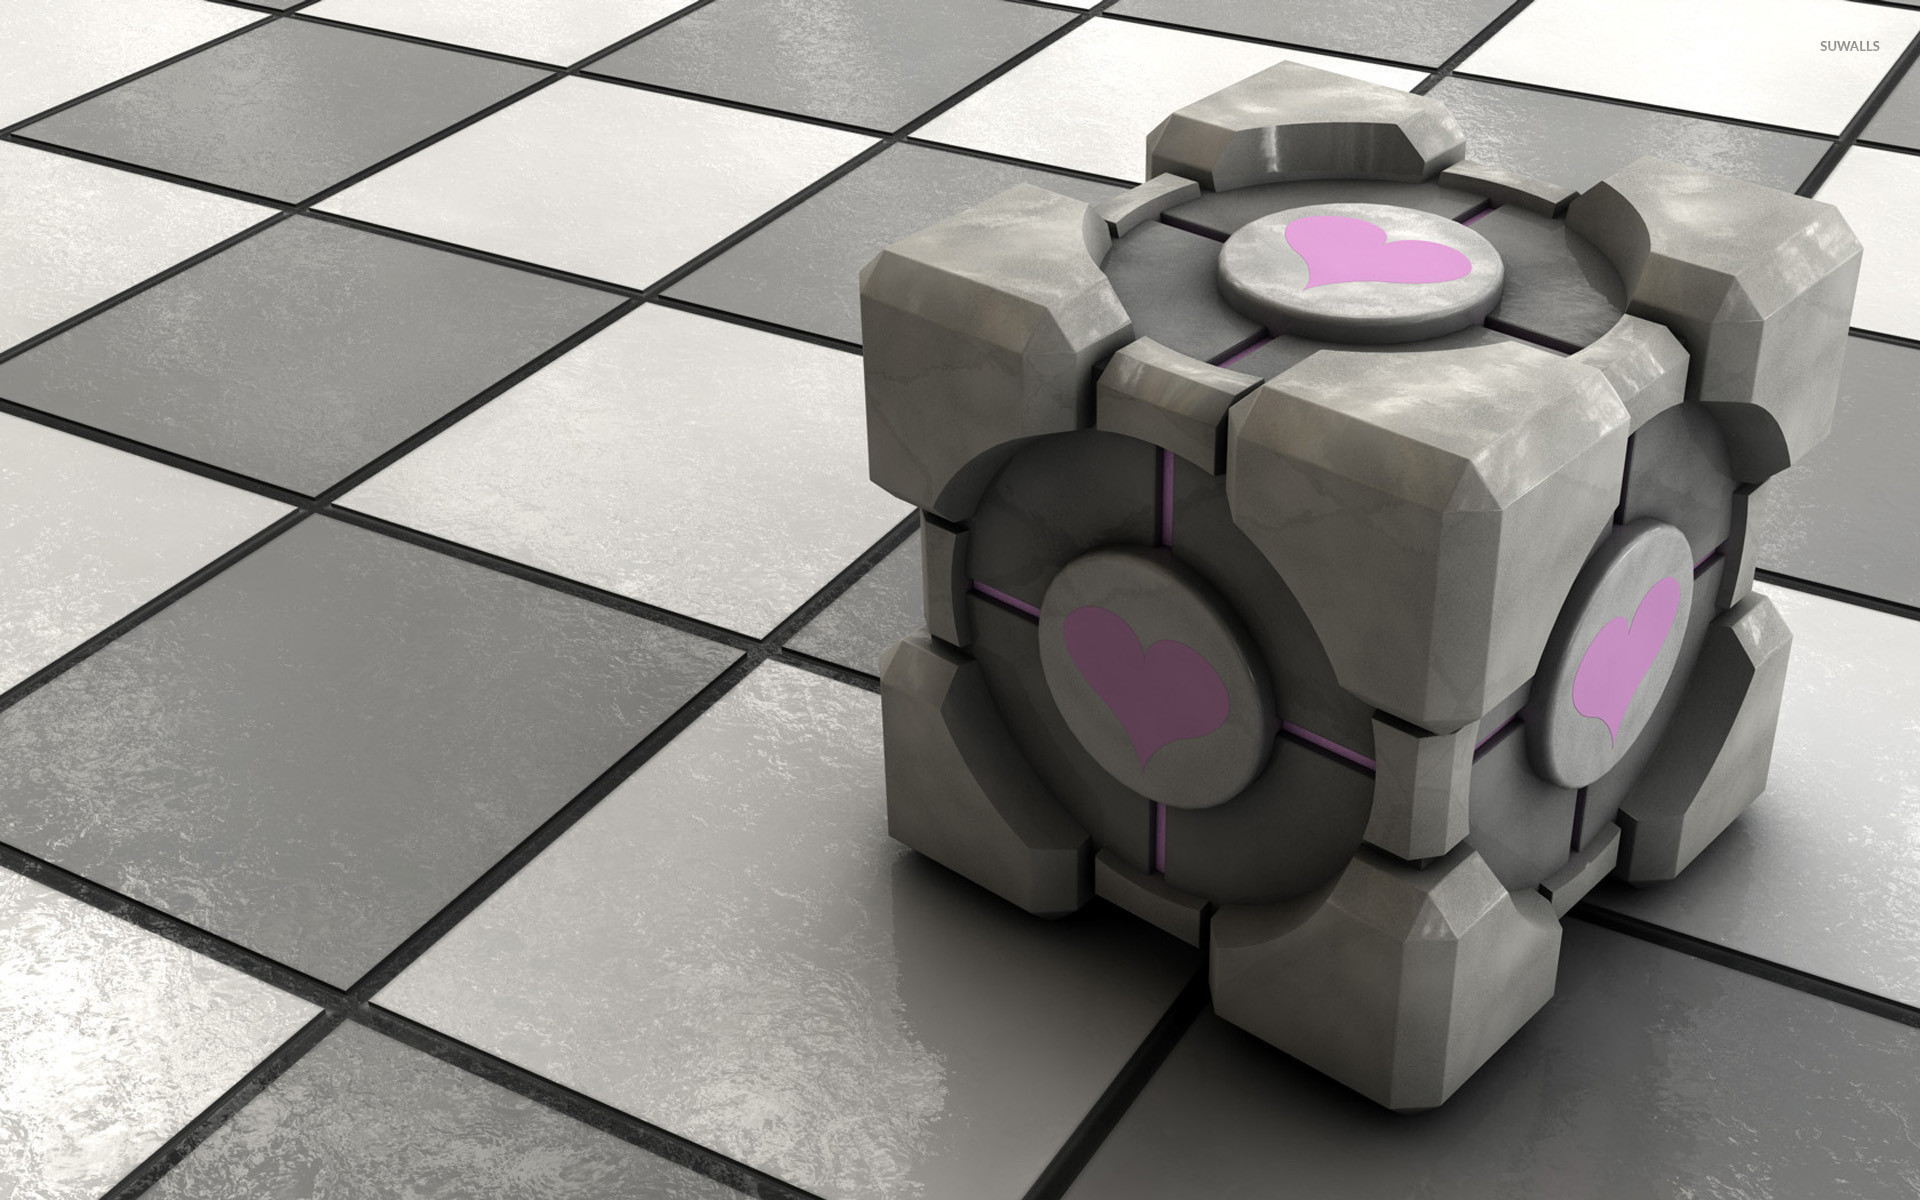 Игры куб 2. Portal 2 Cube Companion. Portal 1 куб компаньон. Portal 2 куб. Куб компаньон из Portal 2.